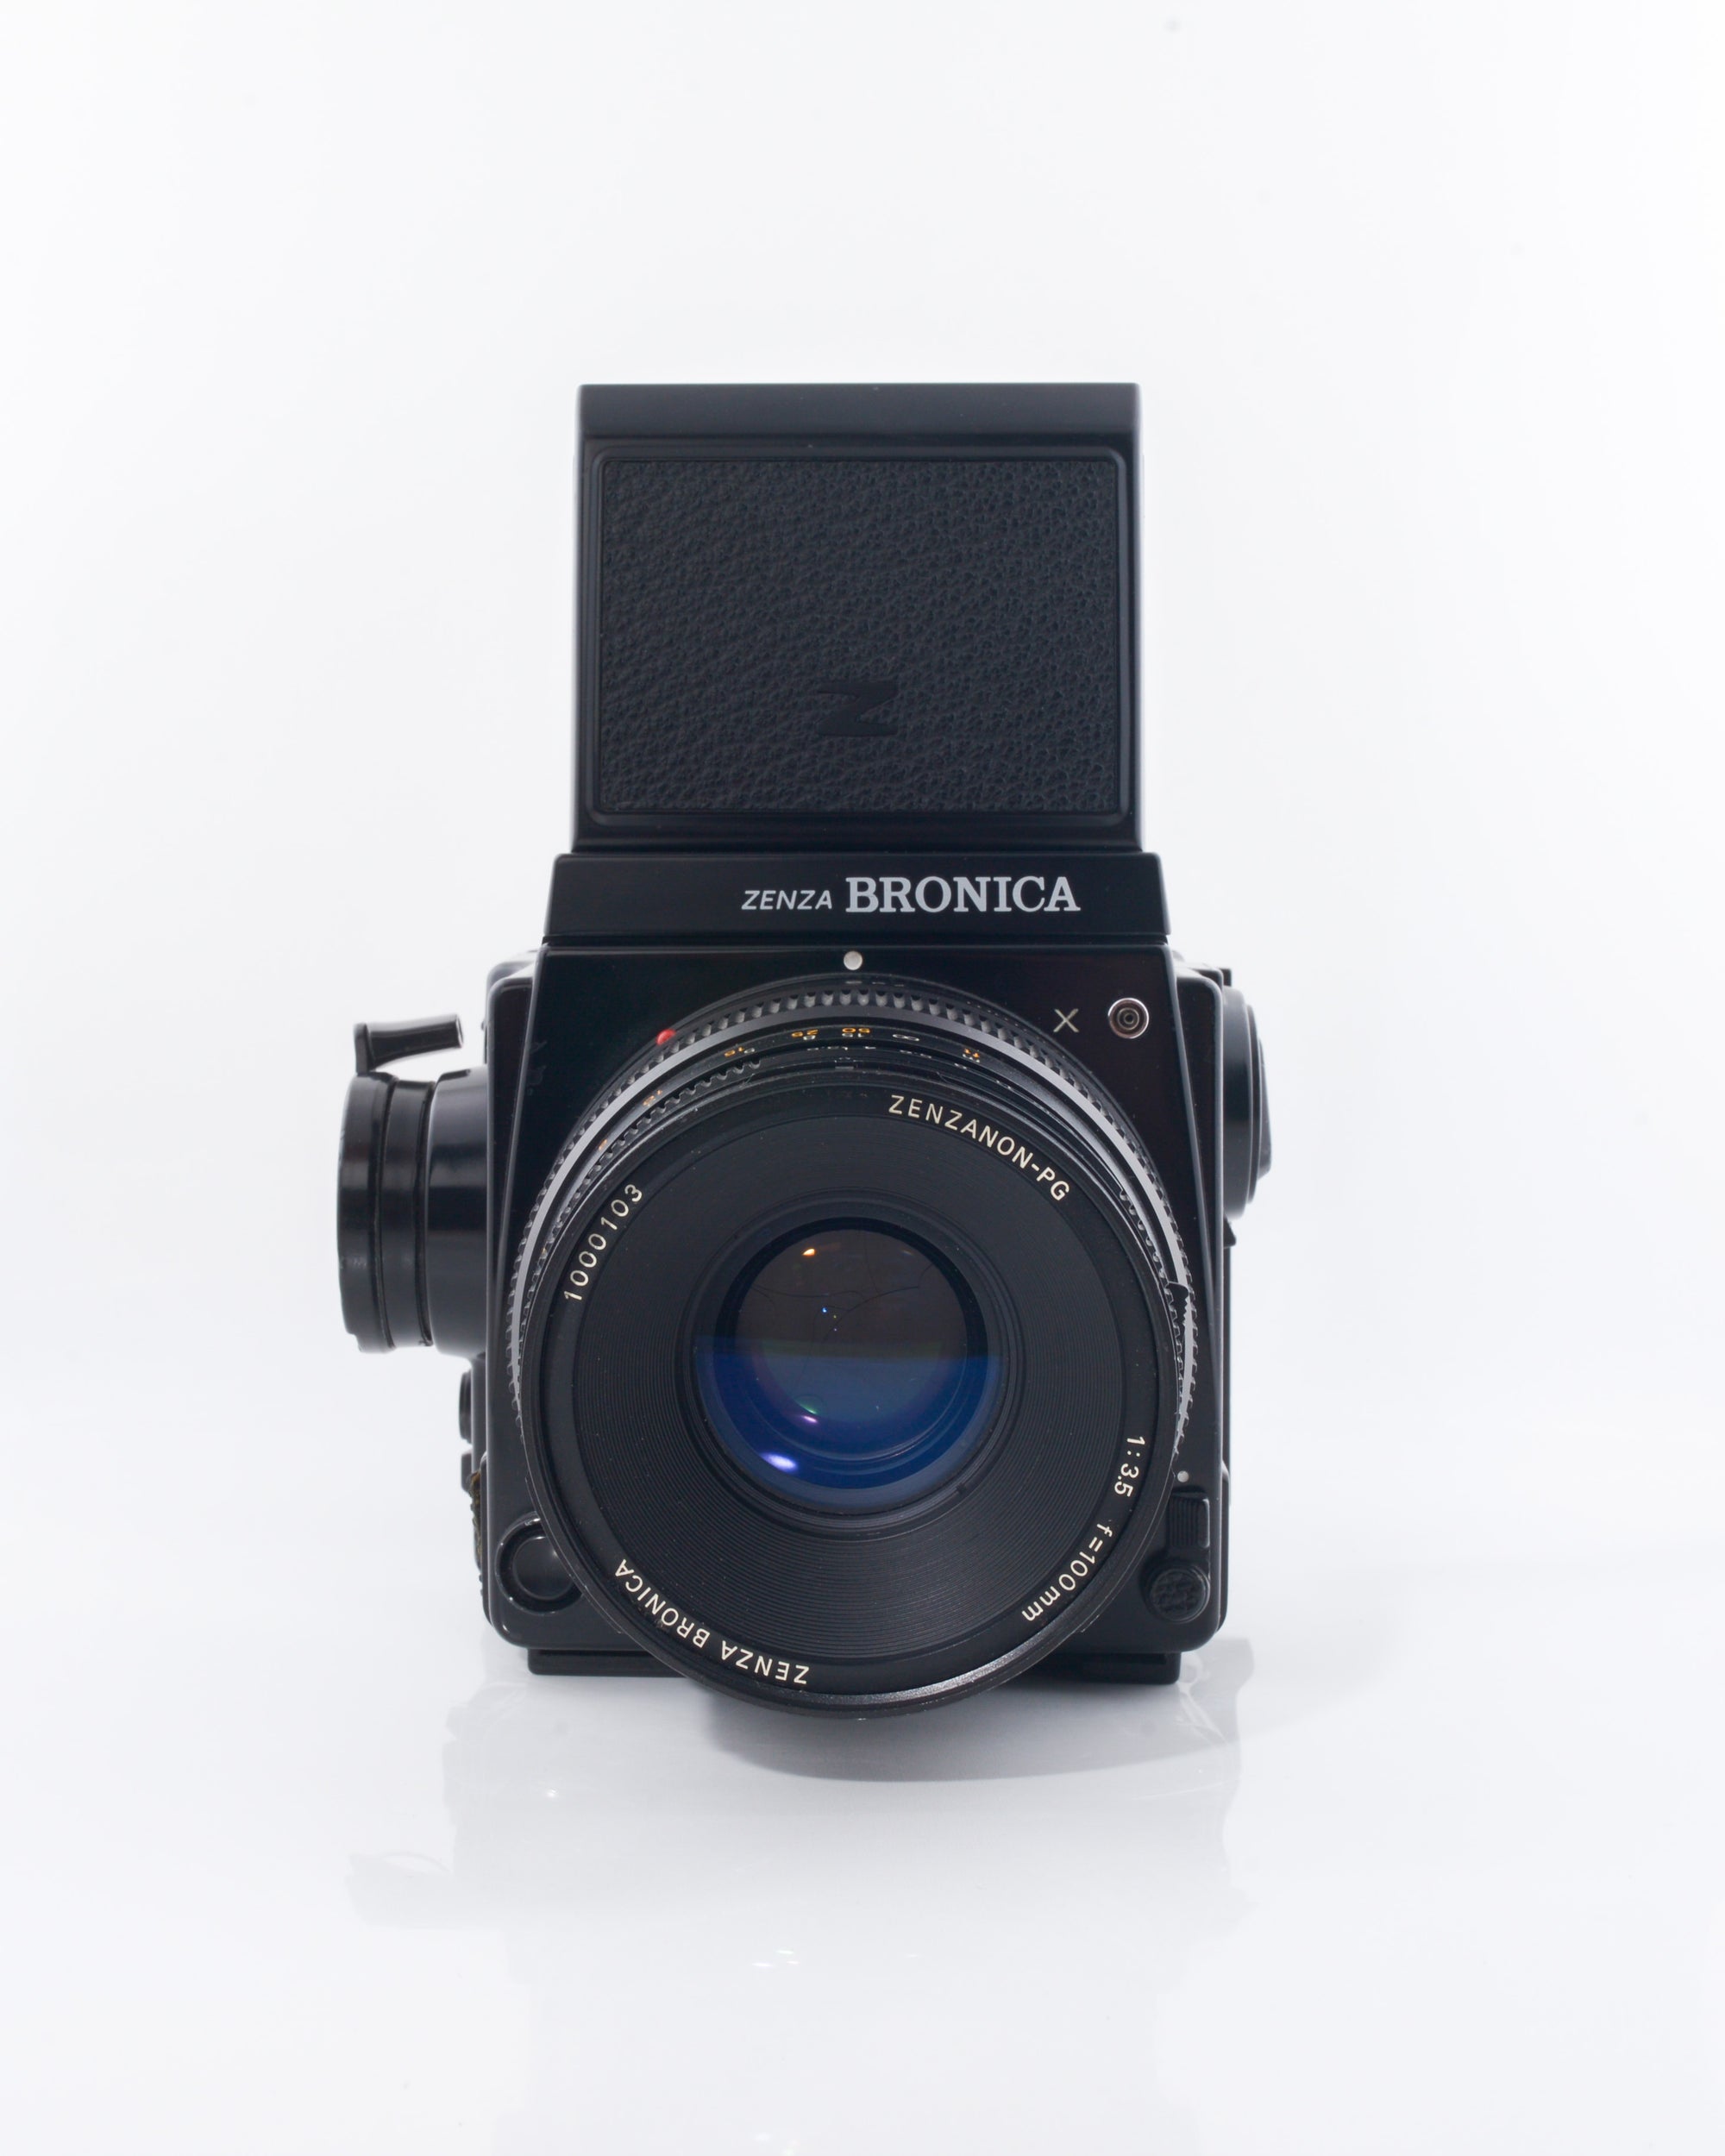 Bronica GS-1 Medium Format film camera with 100mm f3.5 lens